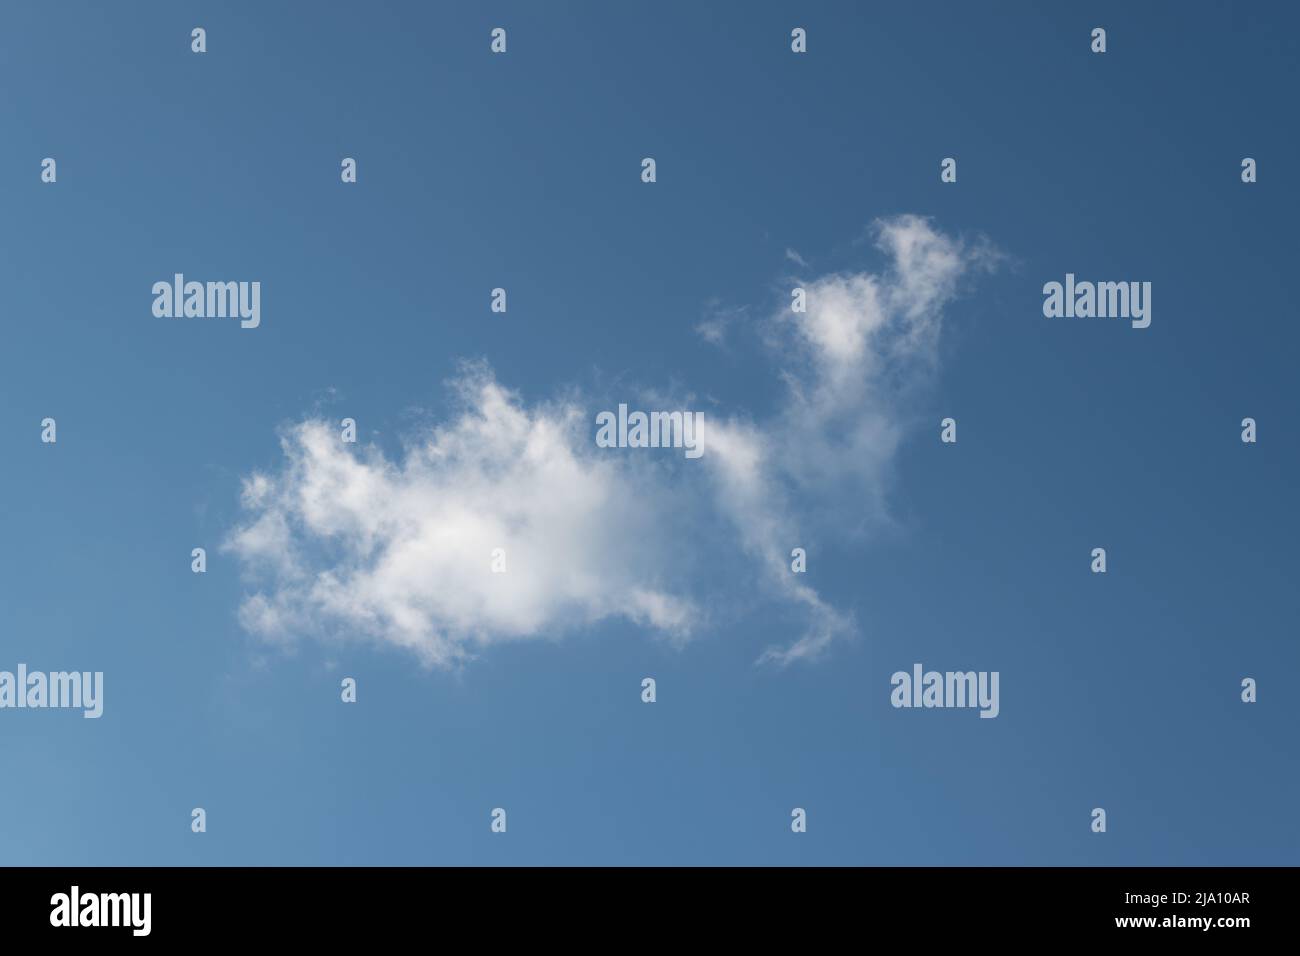 Cloud in blue sky, cloud in shape of fairy tale creature, dragon or bird Stock Photo